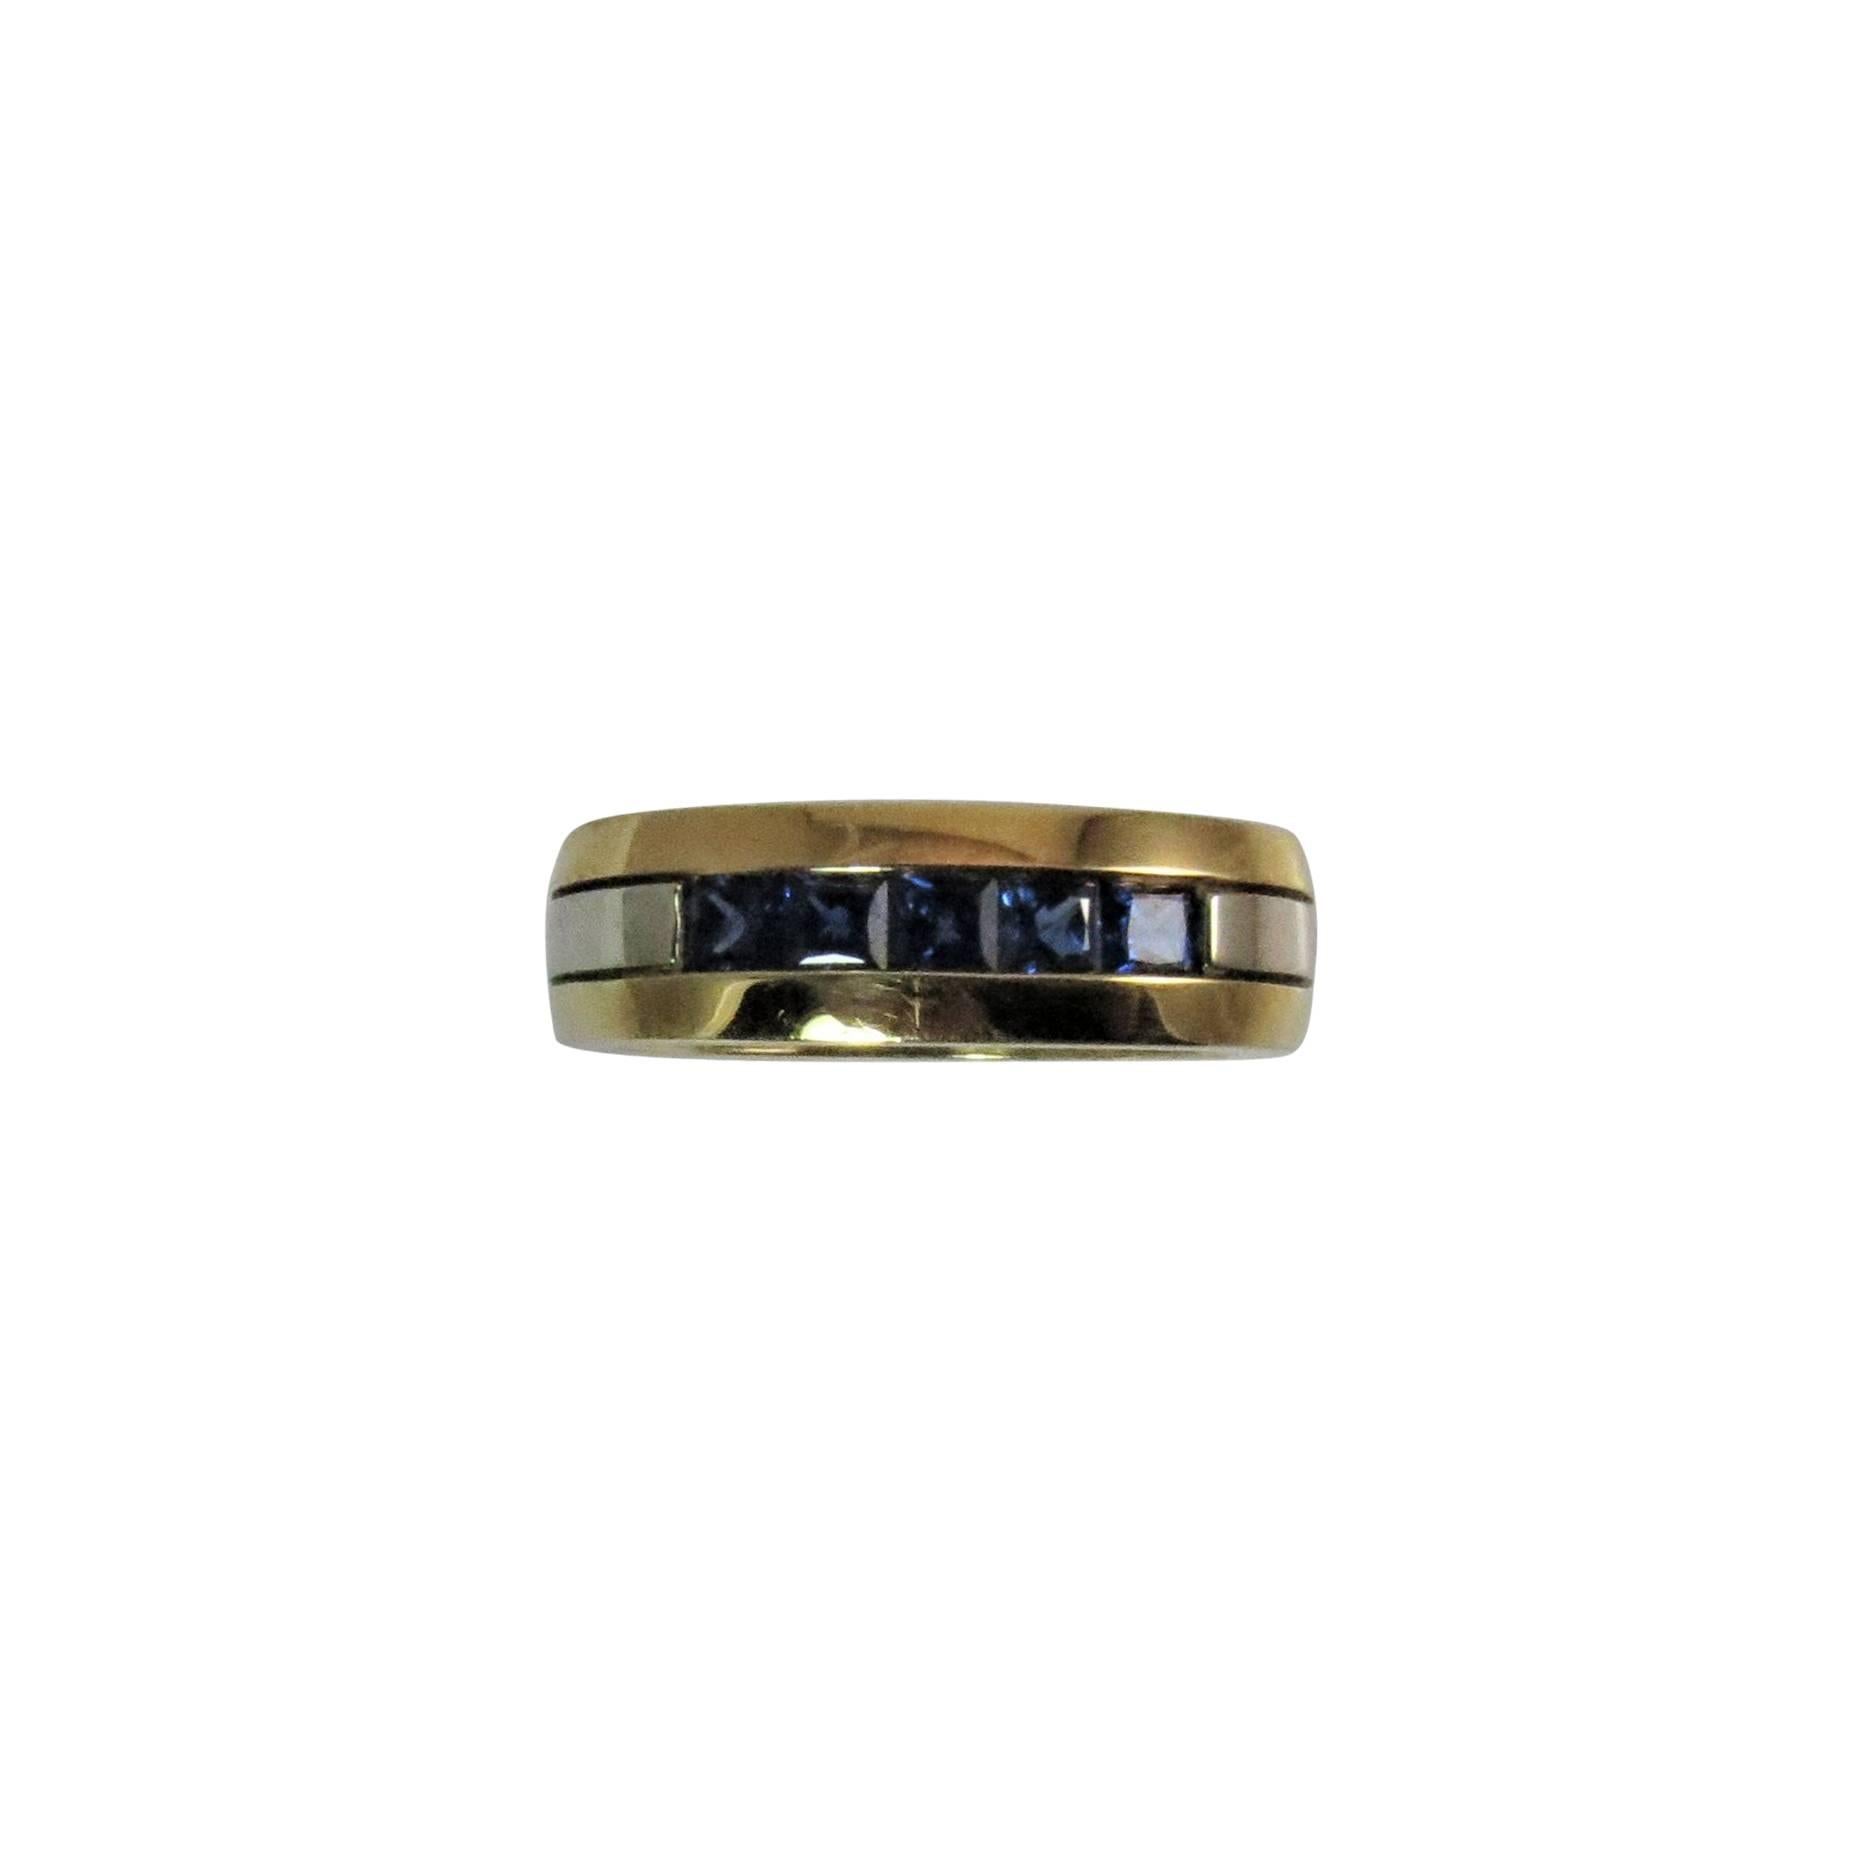 Gents 18 Karat Yellow Gold and 18 Karat White Gold Square Cut Blue Sapphire Ring